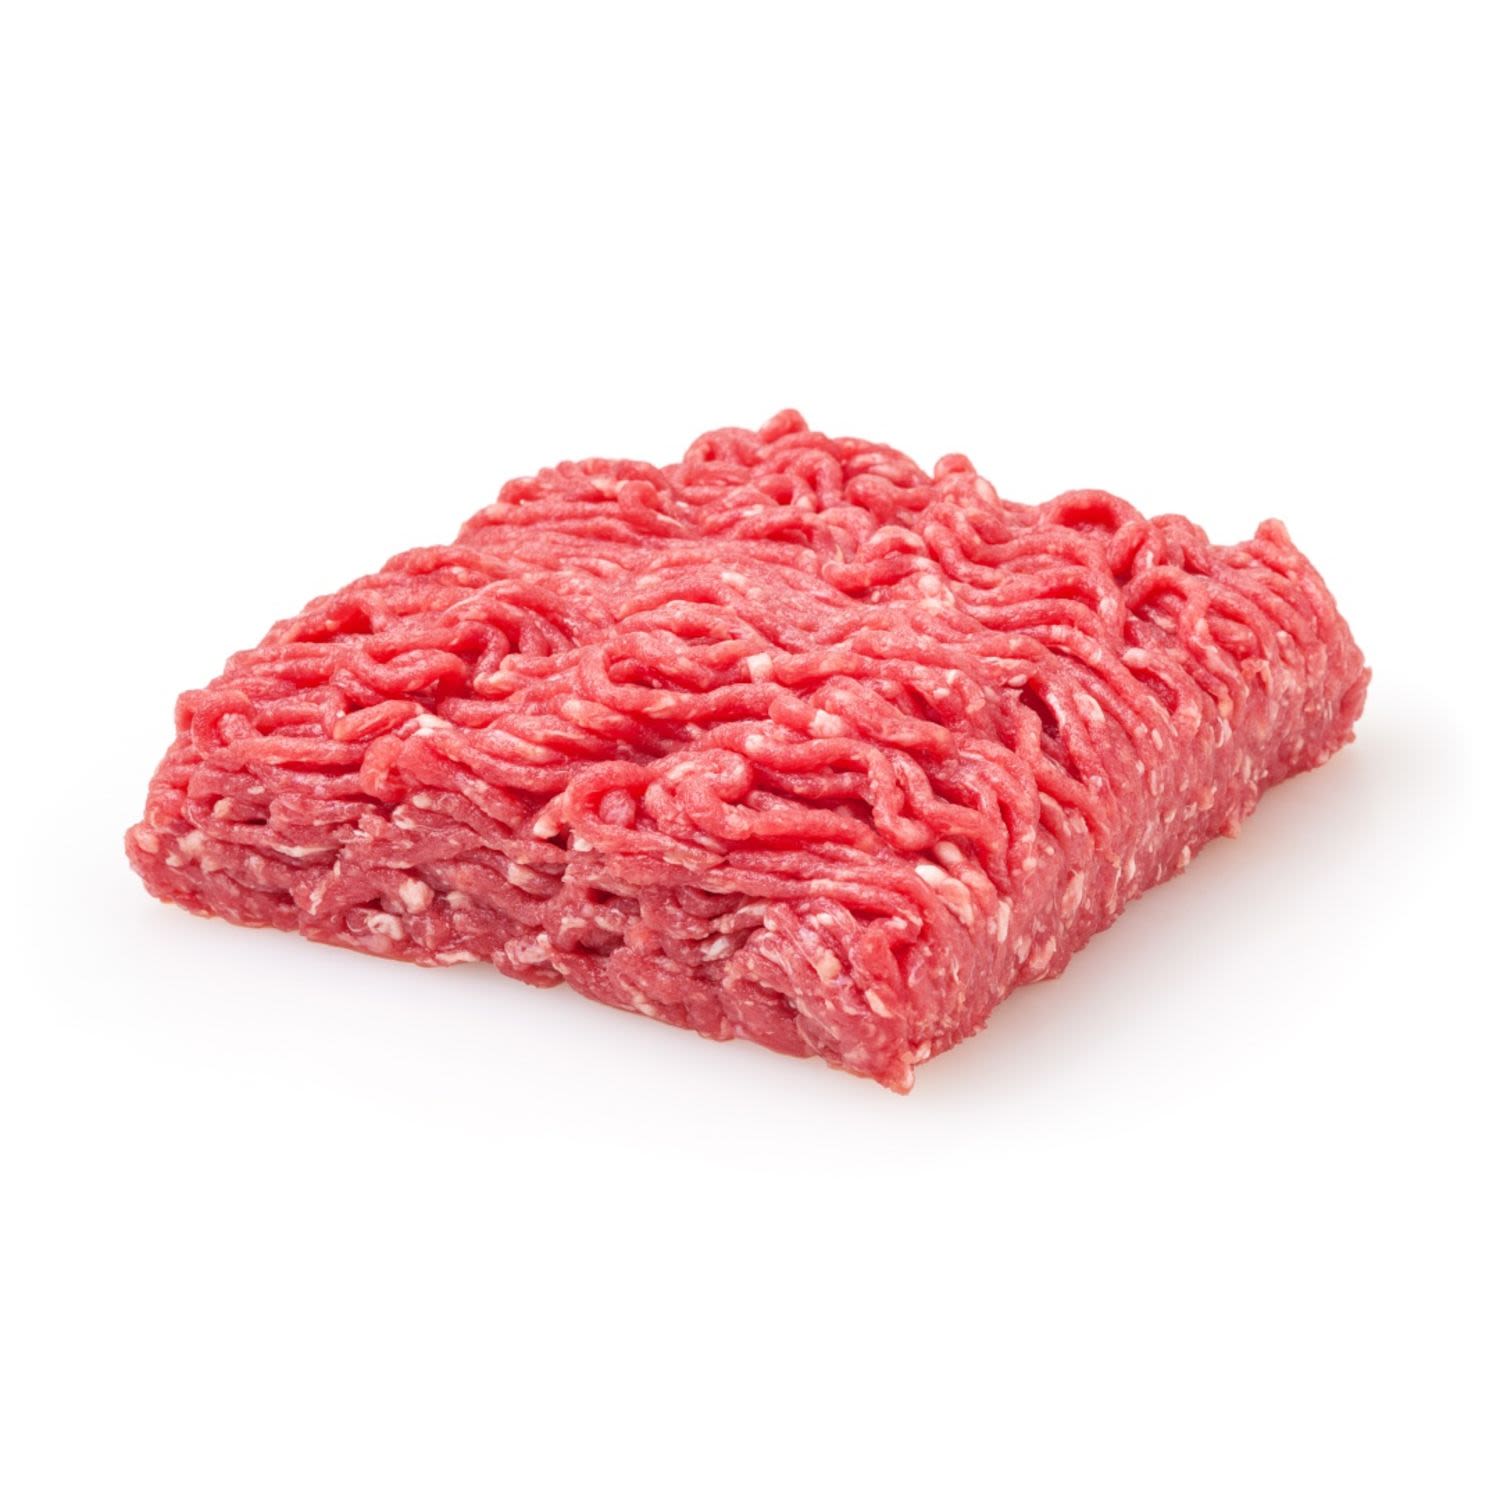 IGA Beef Mince Lean 5 Star, 500 Gram